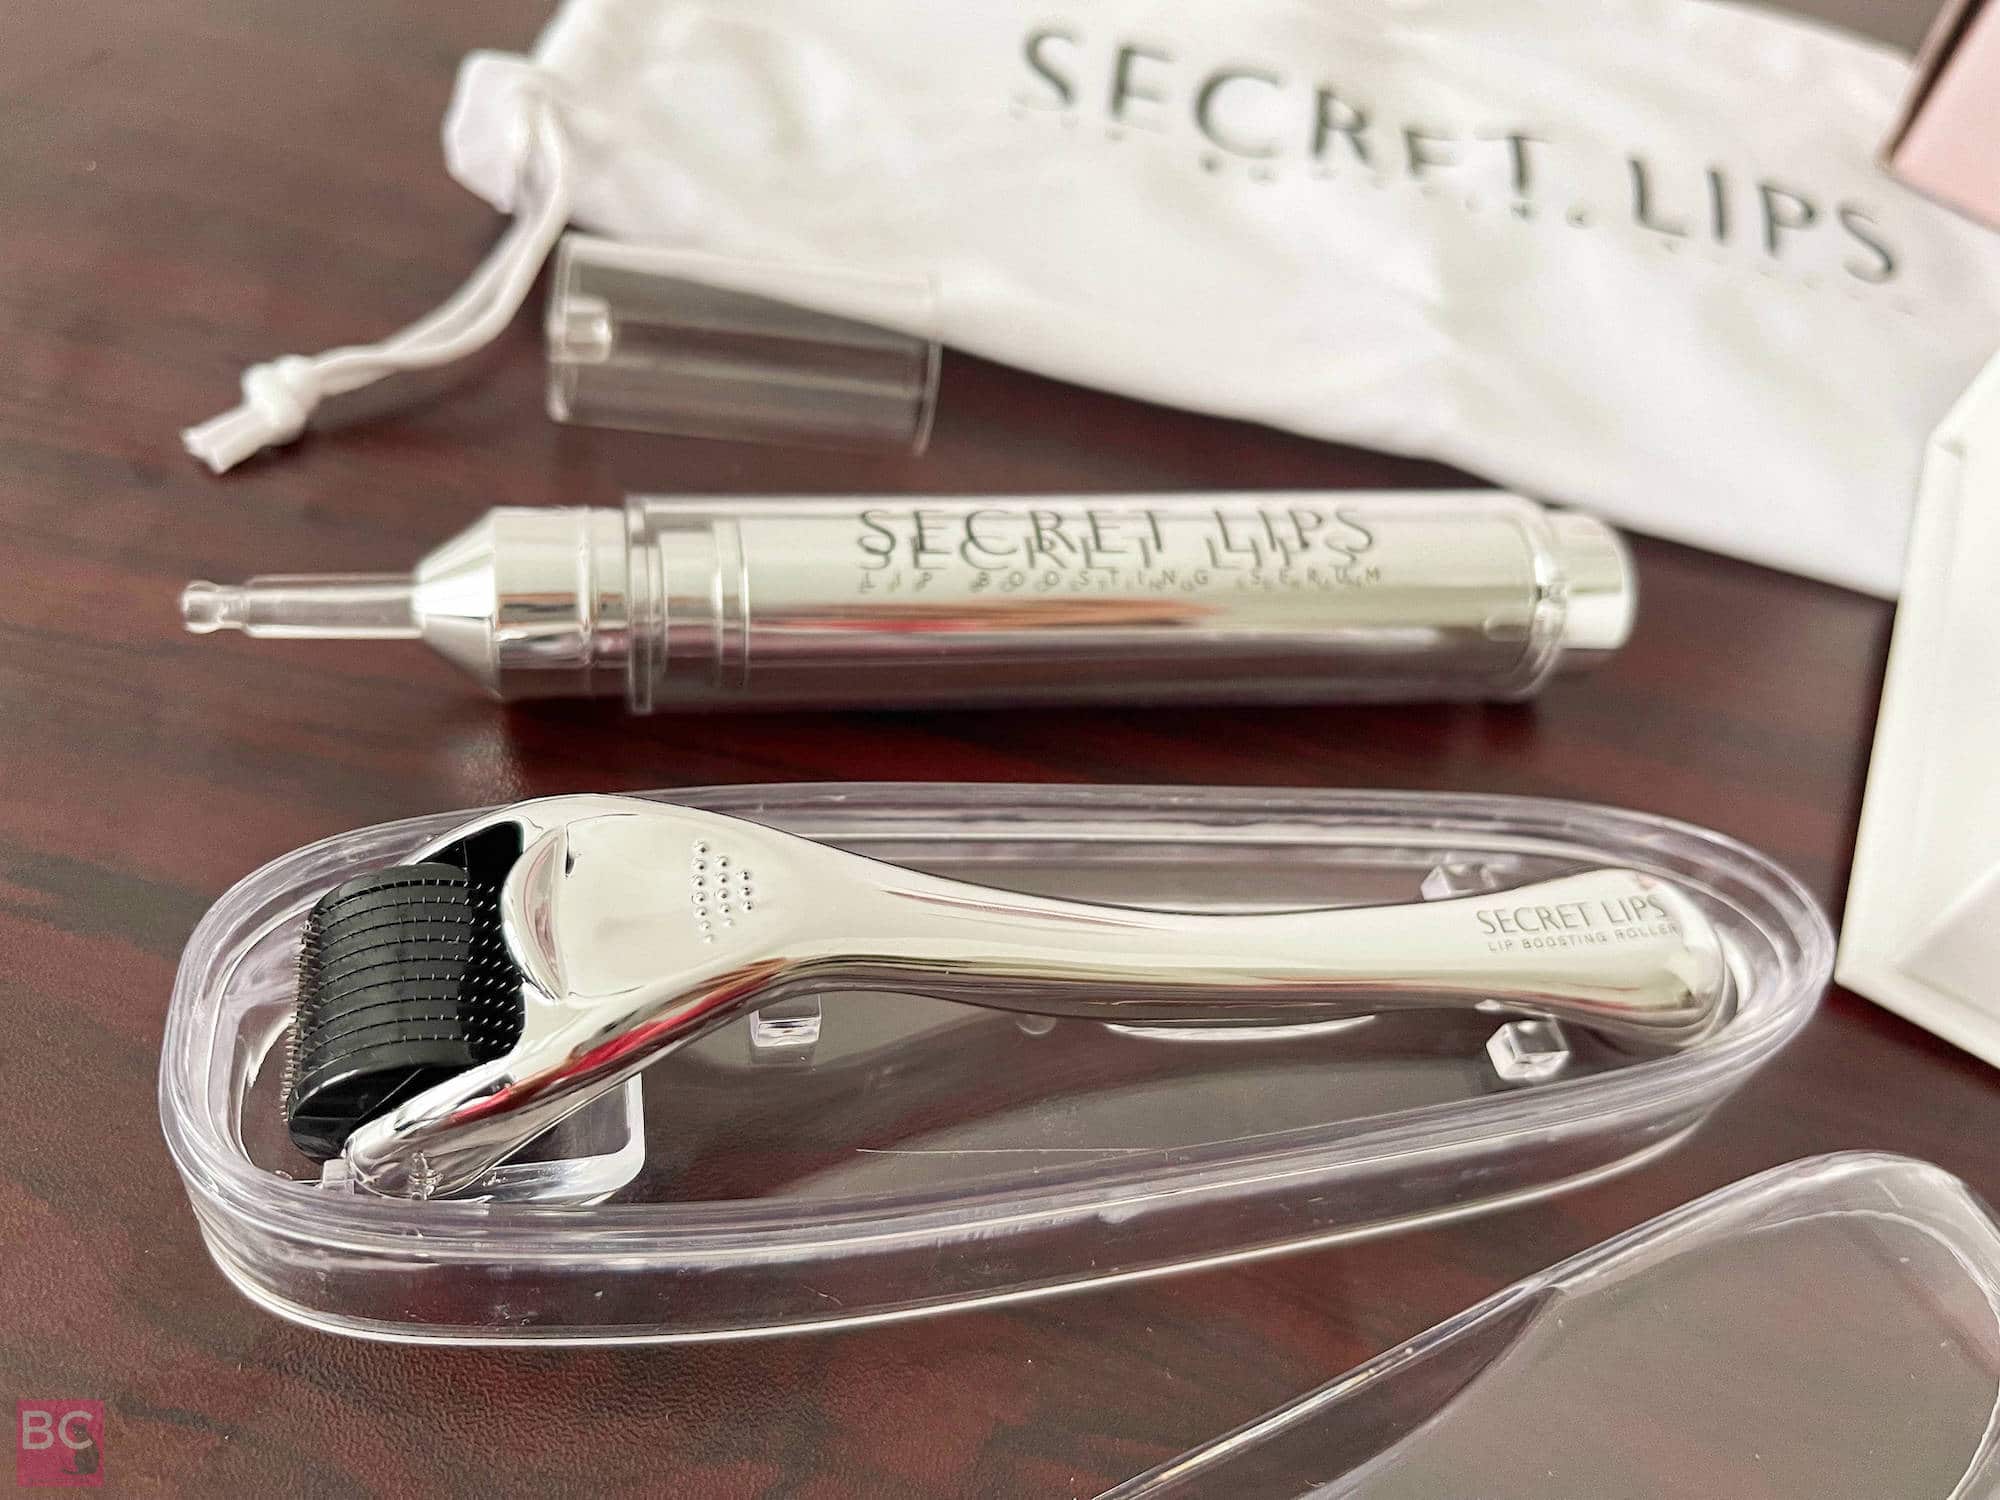 SECRET LIPS ERFAHRUNG Lip Boosting Kit Lip Dermaroller Nadel Roller wie oft anwenden?